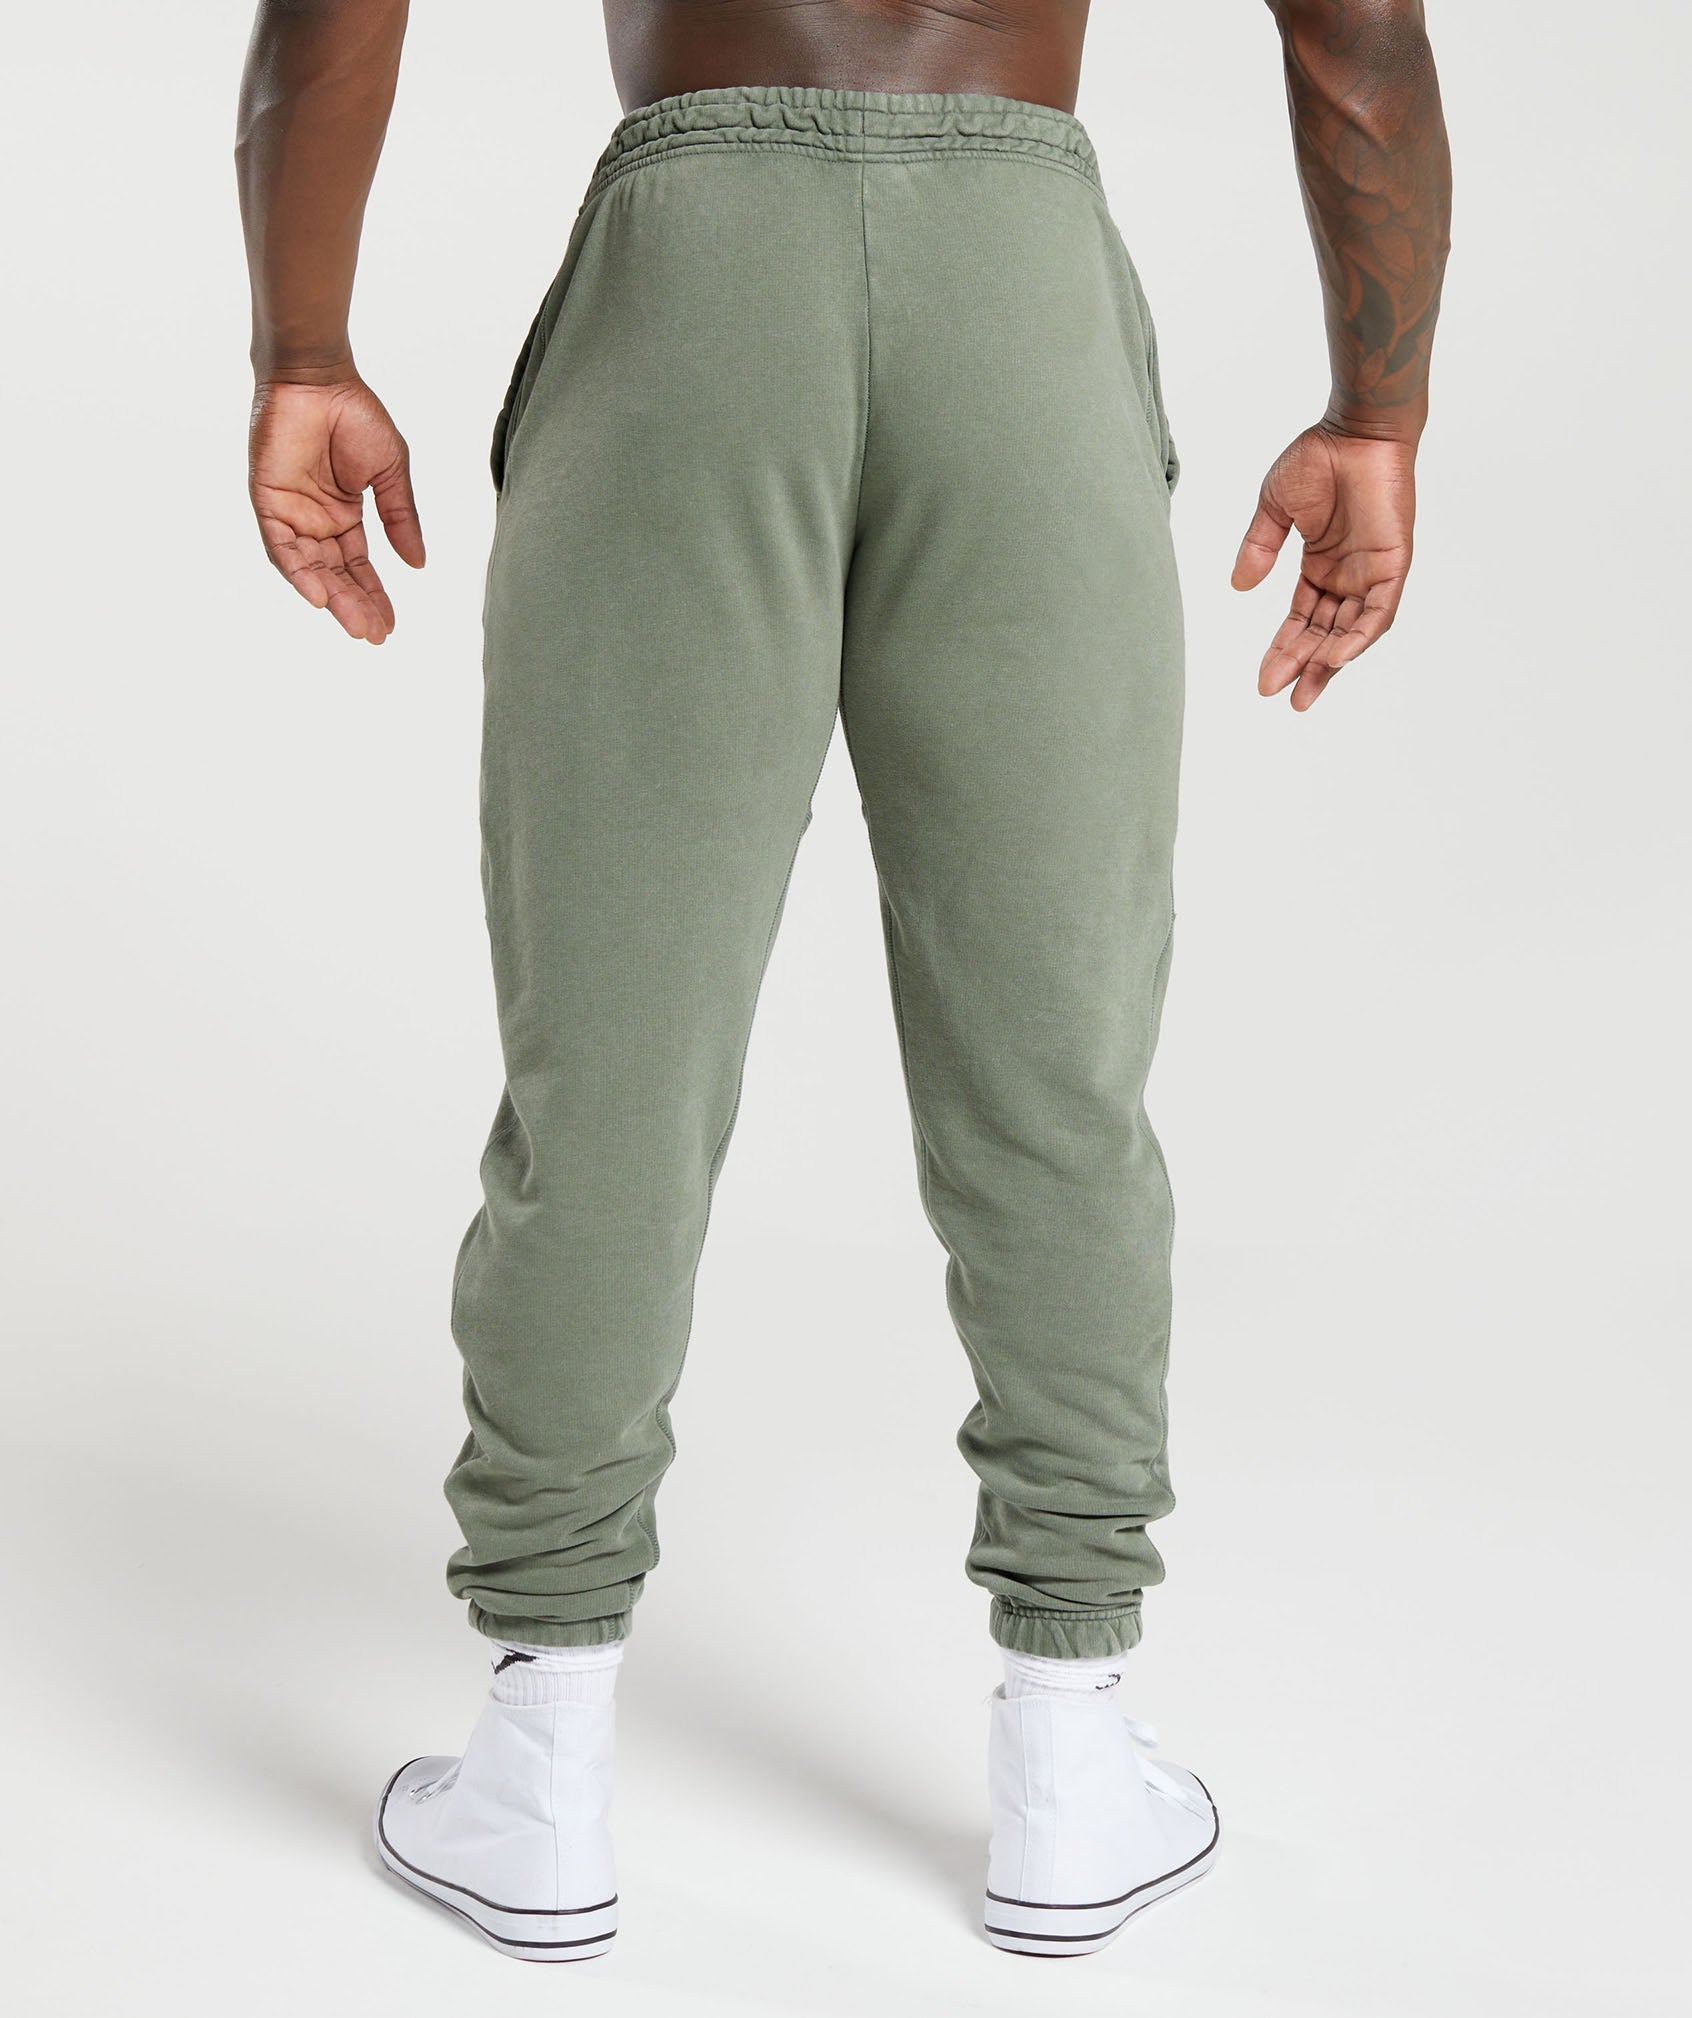 Gray Joggers Athleisure Galaxy Pants Yoga Pants Loungewear Fleece Jogger  Sweatpants Athletic Pants Festival Joggers Unisex 